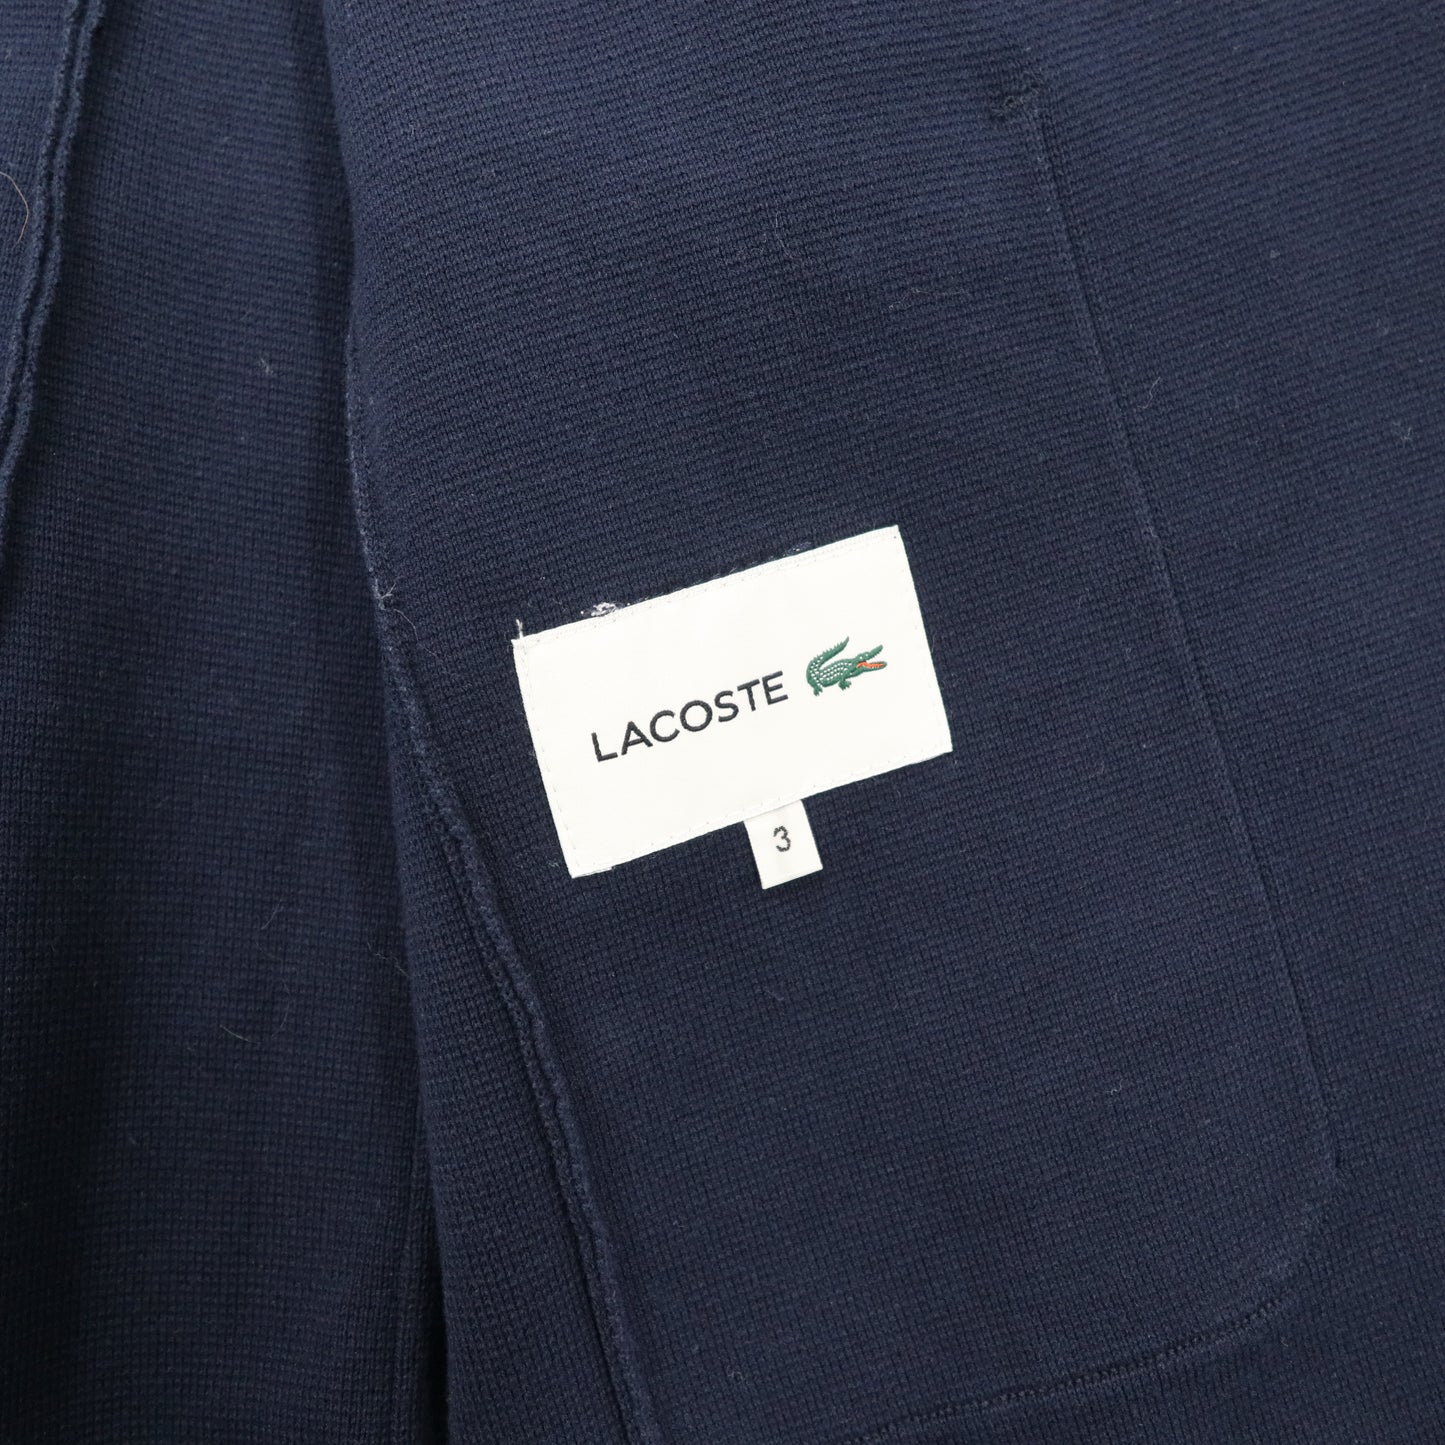 LACOSTE ニット仕上がり テーラード ジャケット 3 ネイビー コットン ミラノリブ ワンポイントロゴ刺繍 VH752E